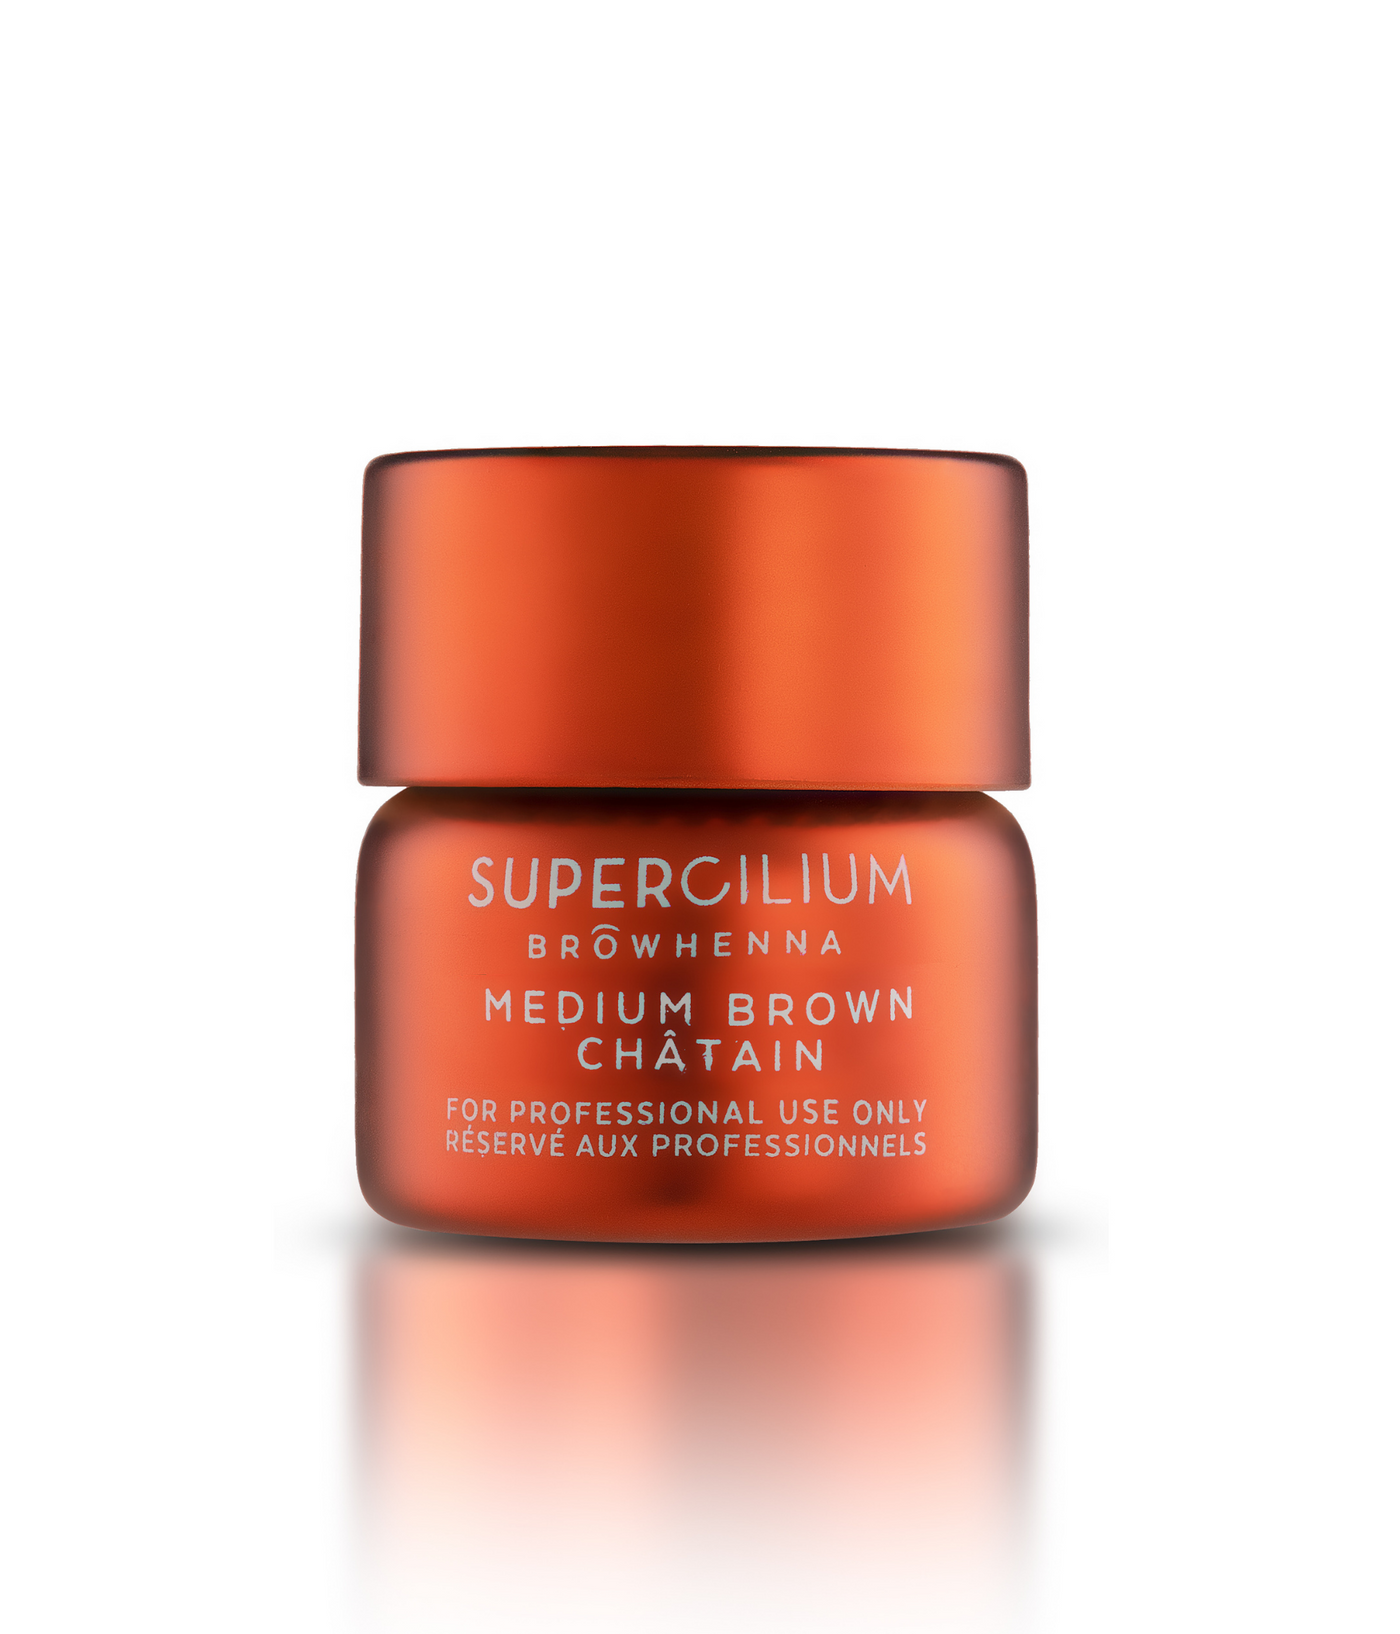 Supercilium Medium Brown Henna Brow Powder